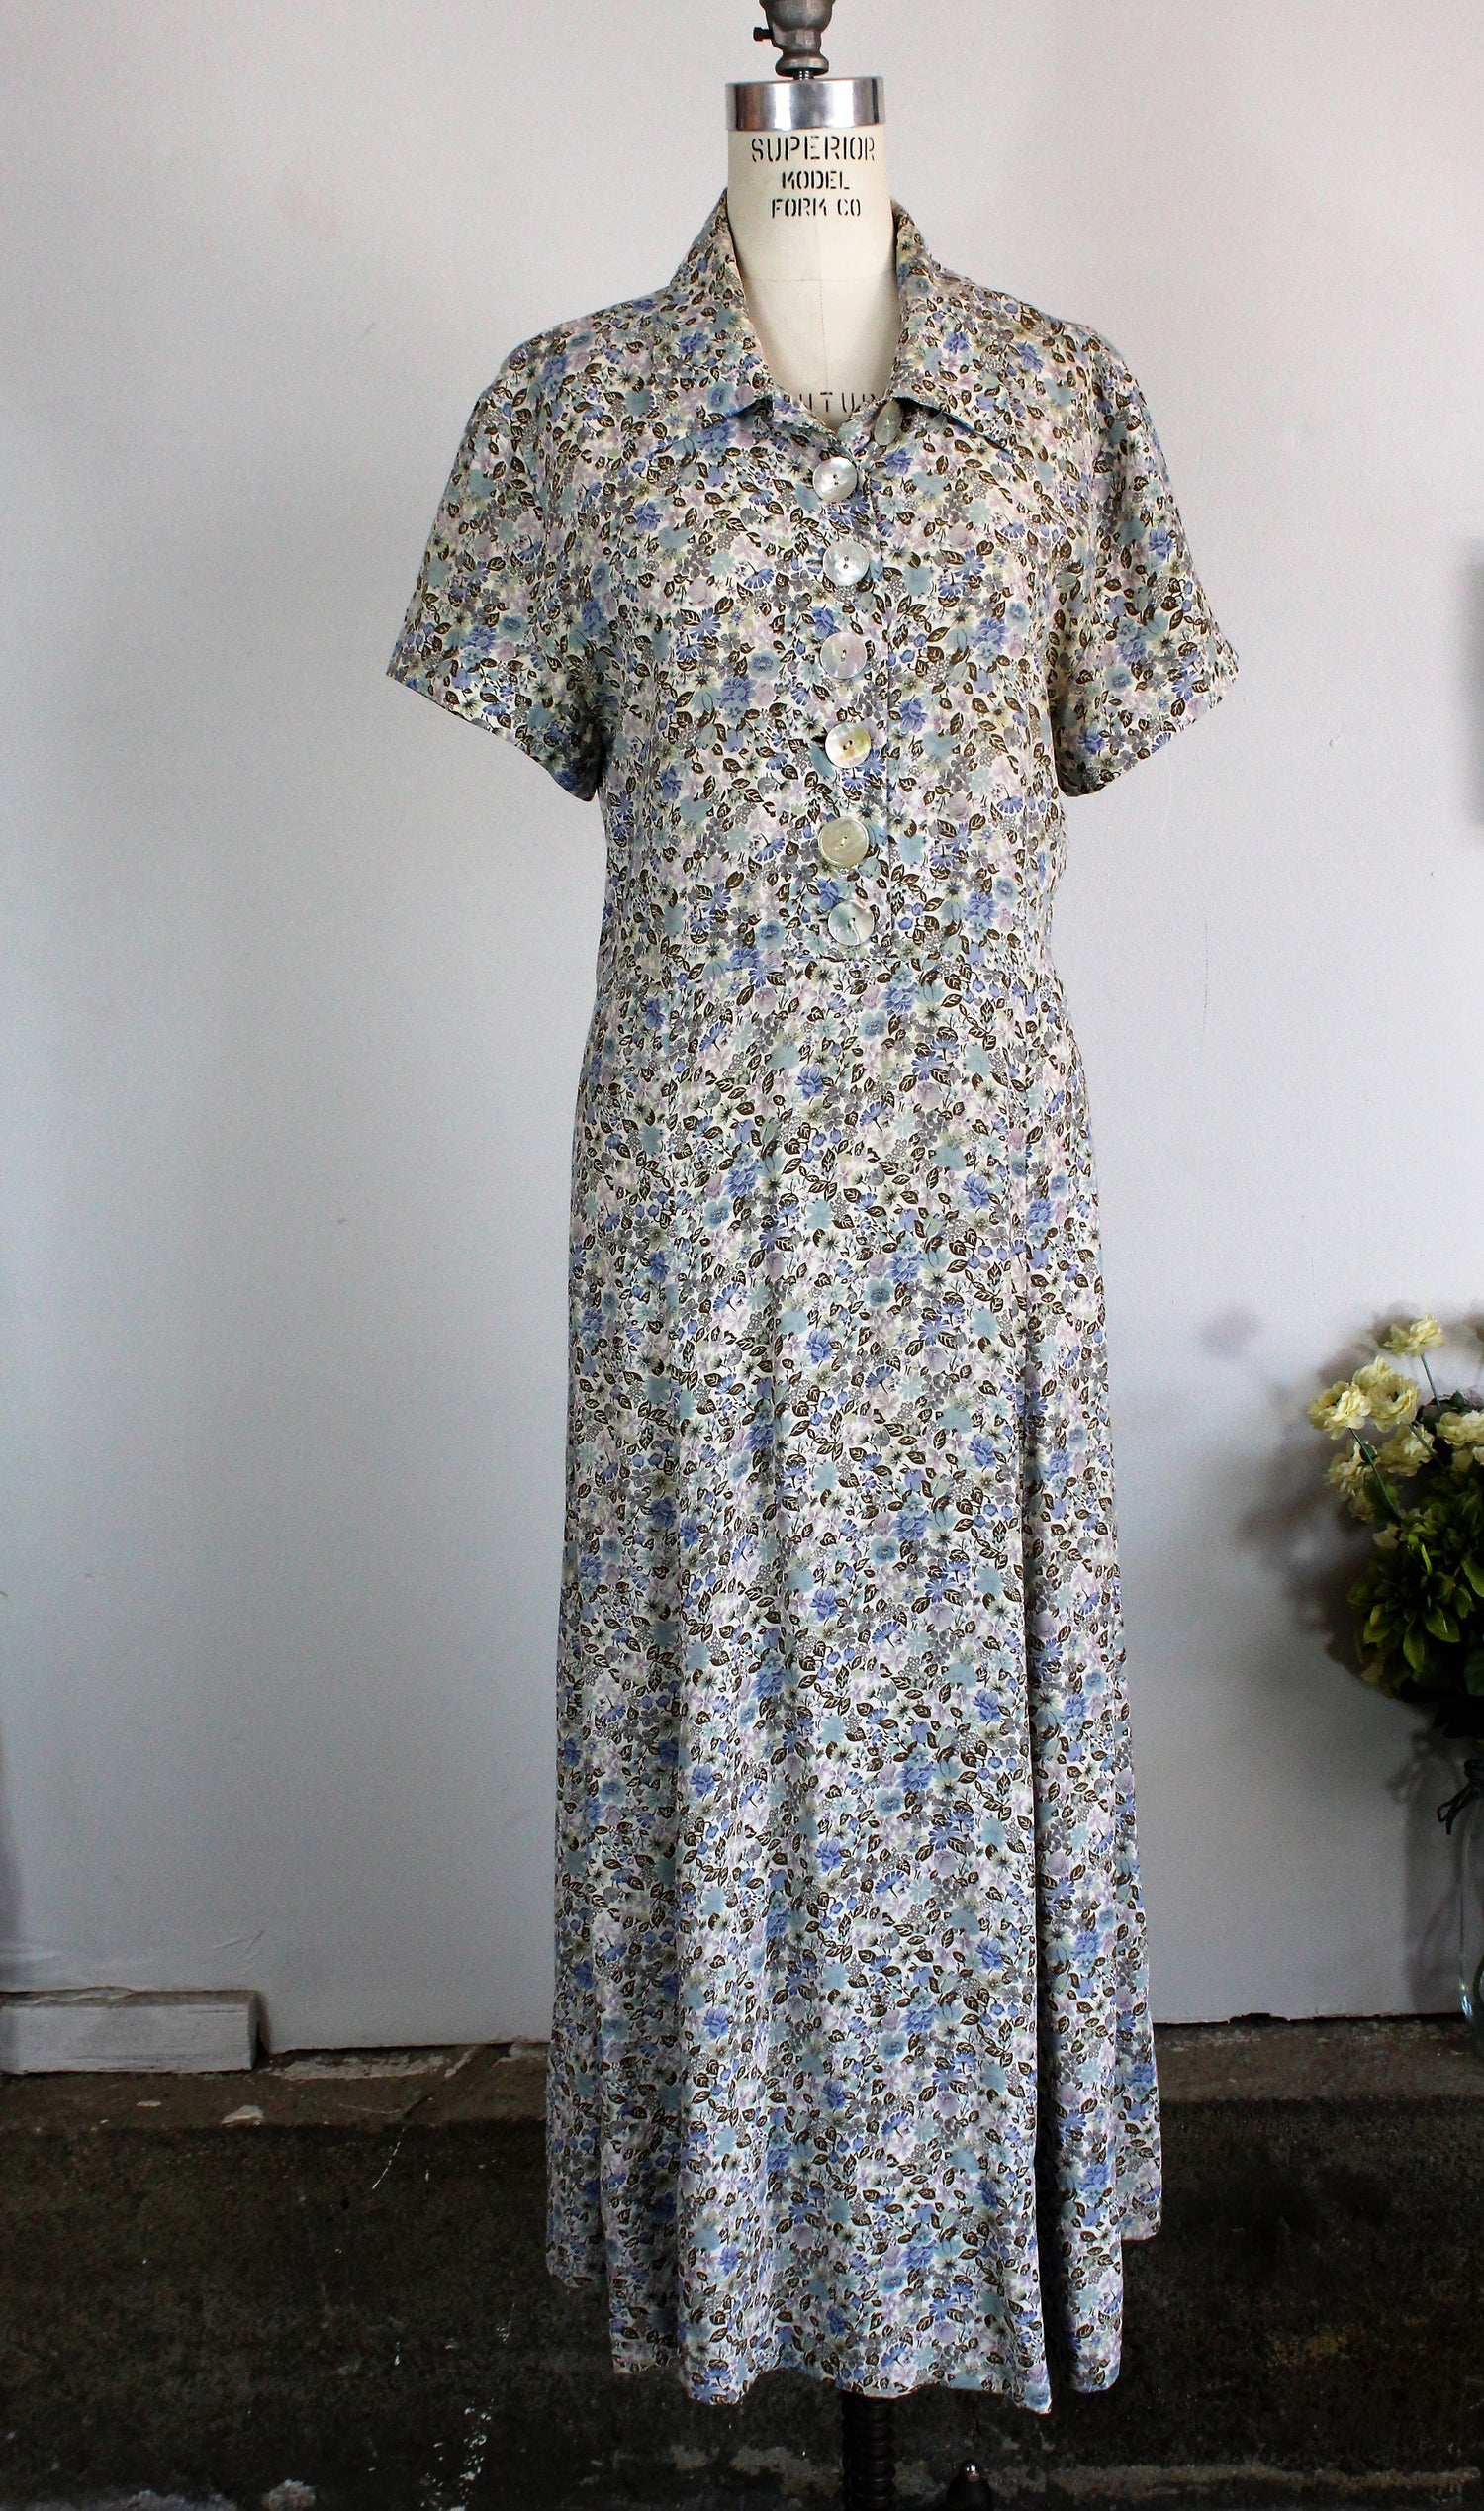 Vintage 1980s Does 1940s Floral Print Dress / Broomskirts by Lucia Lukken